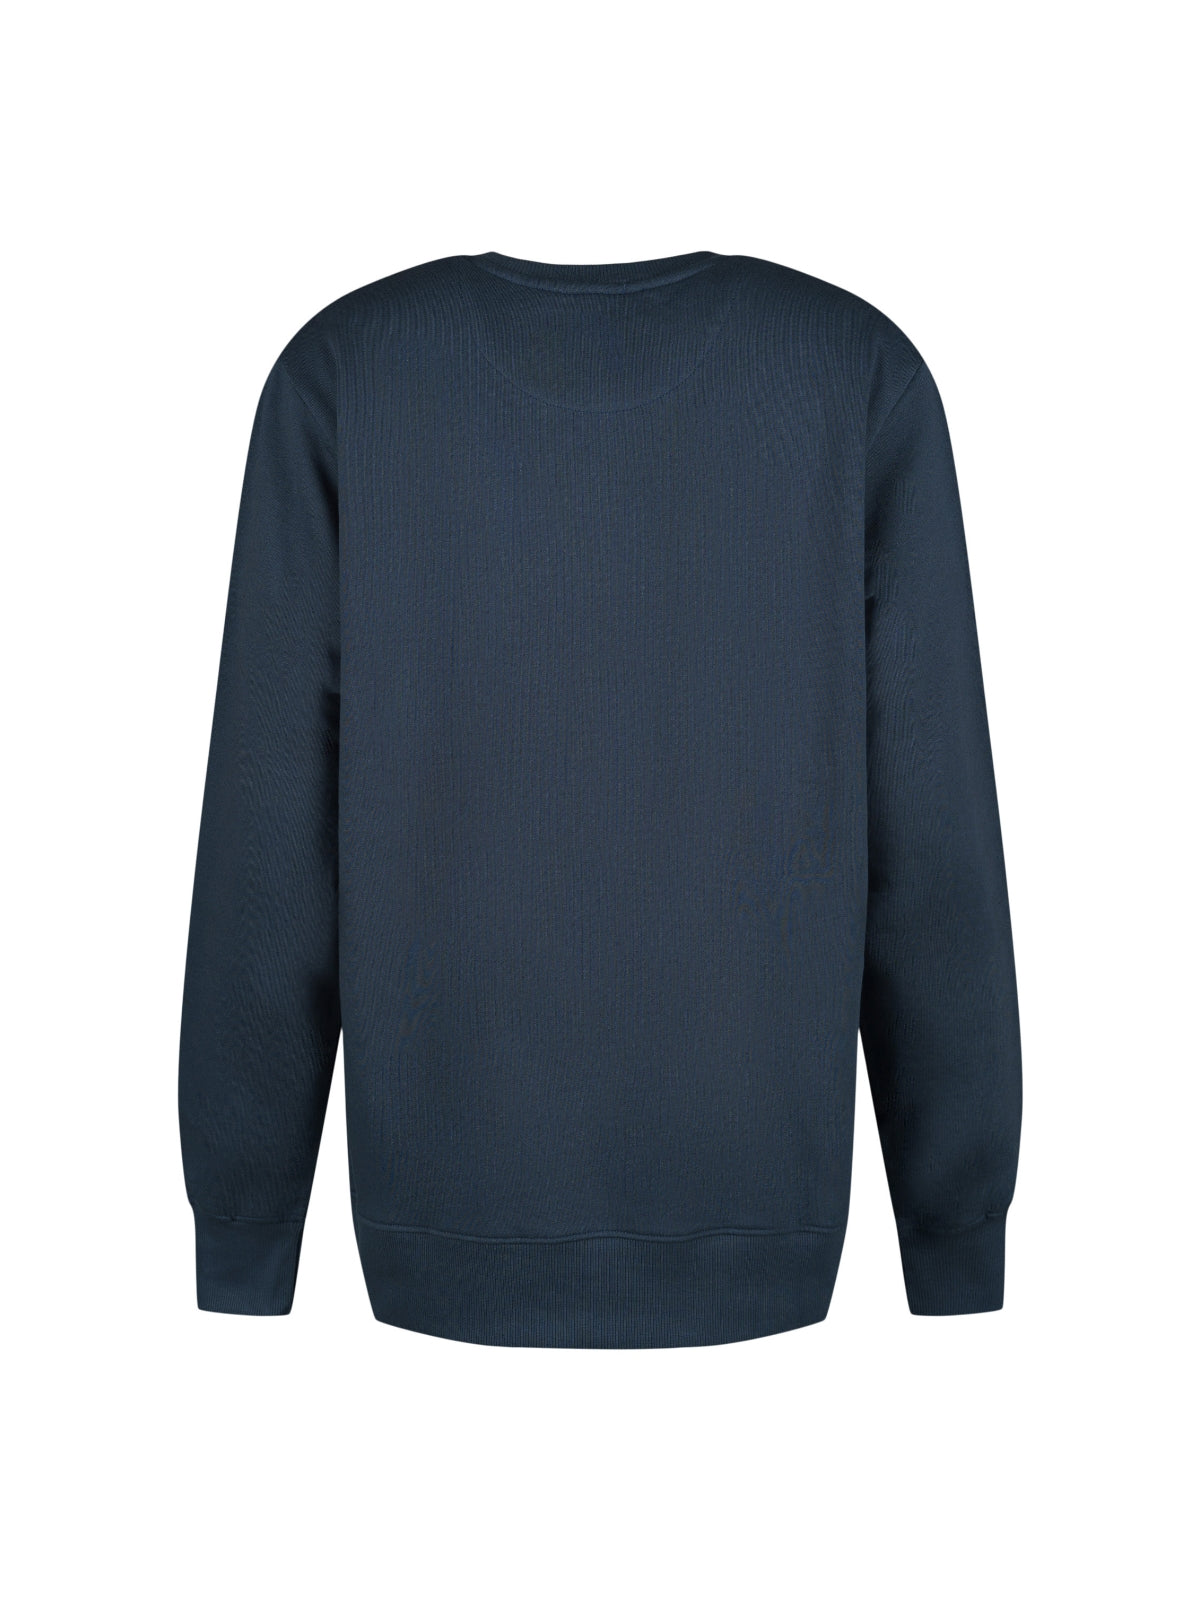 ILON EDITION - Banger College Sweatshirt